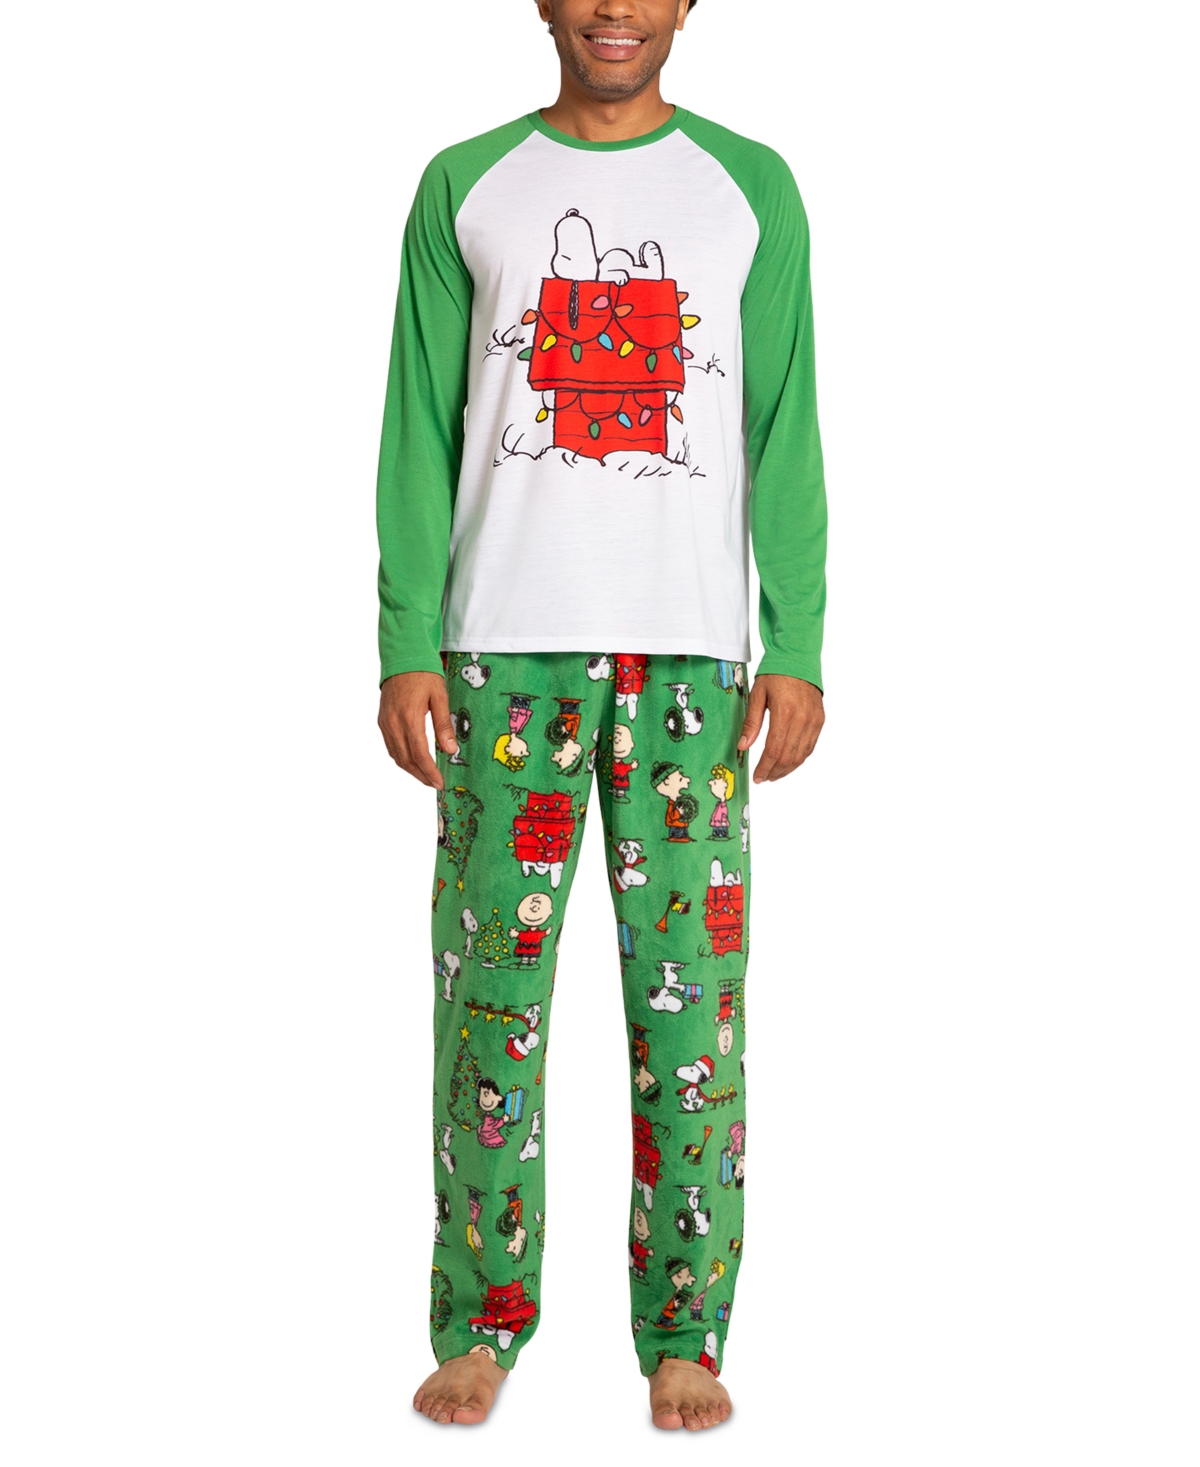 Matching Men's Peanuts Raglan-Sleeve Top and Pajama Pants Set - Green